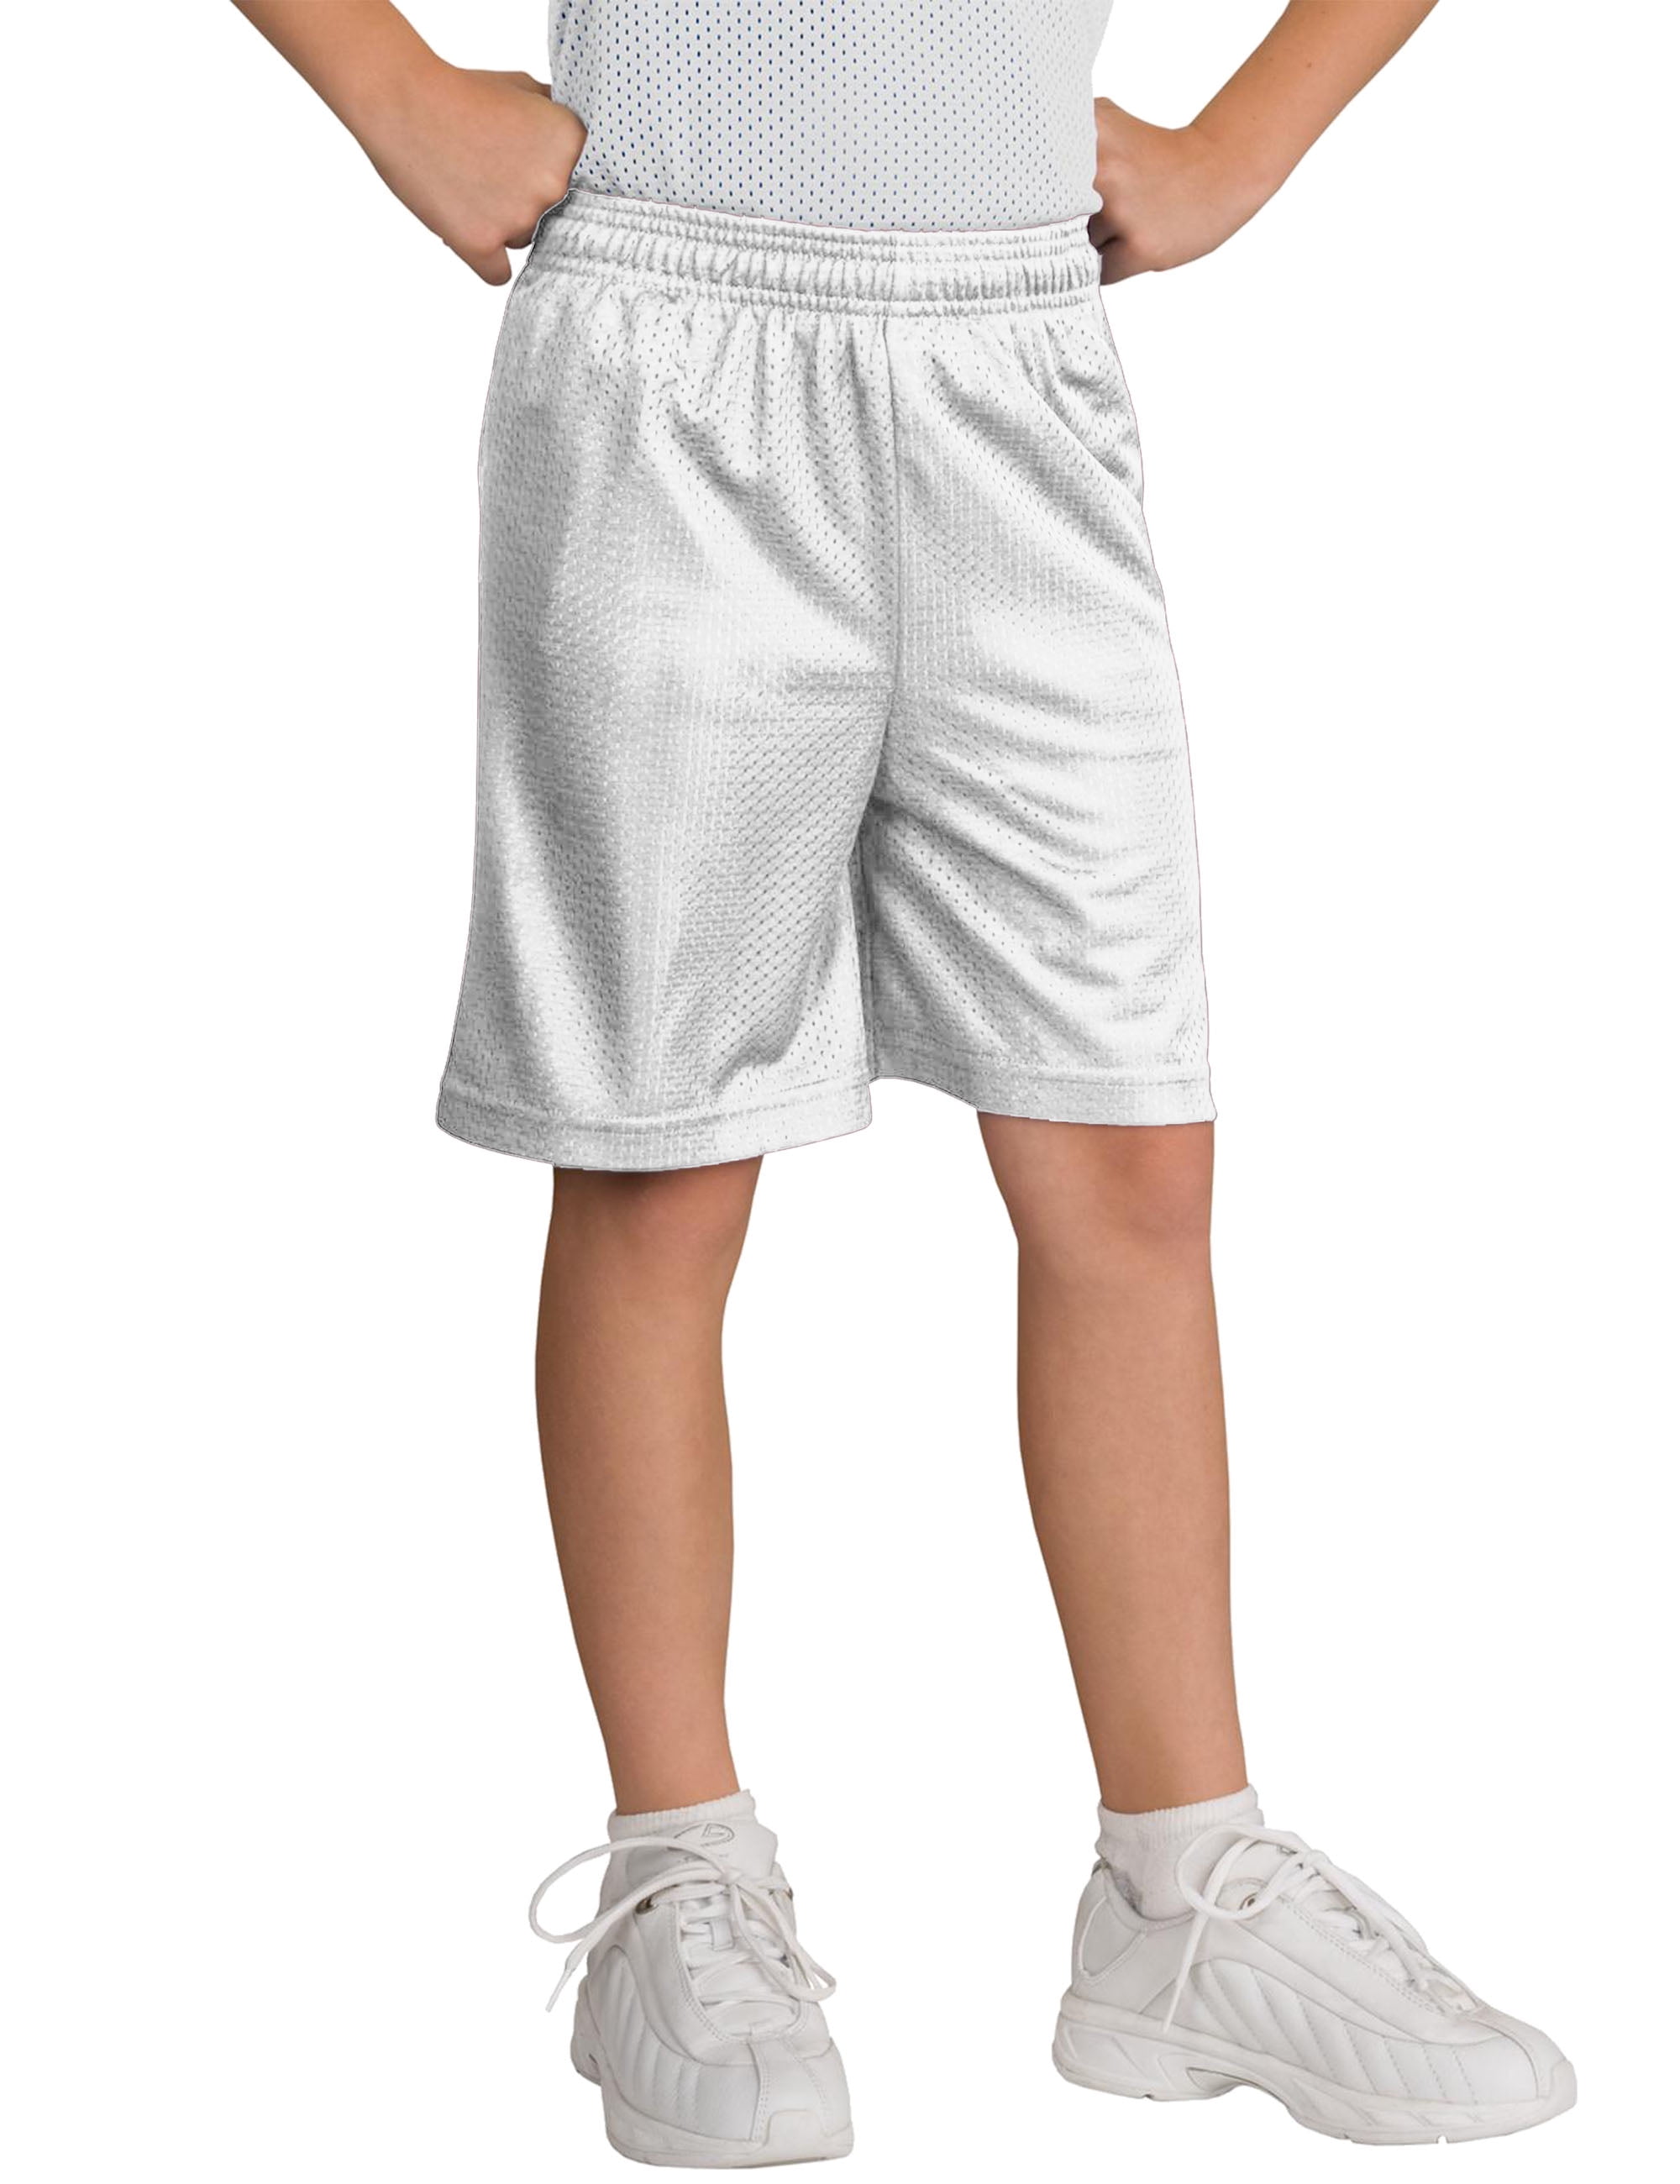 white shorts for boys